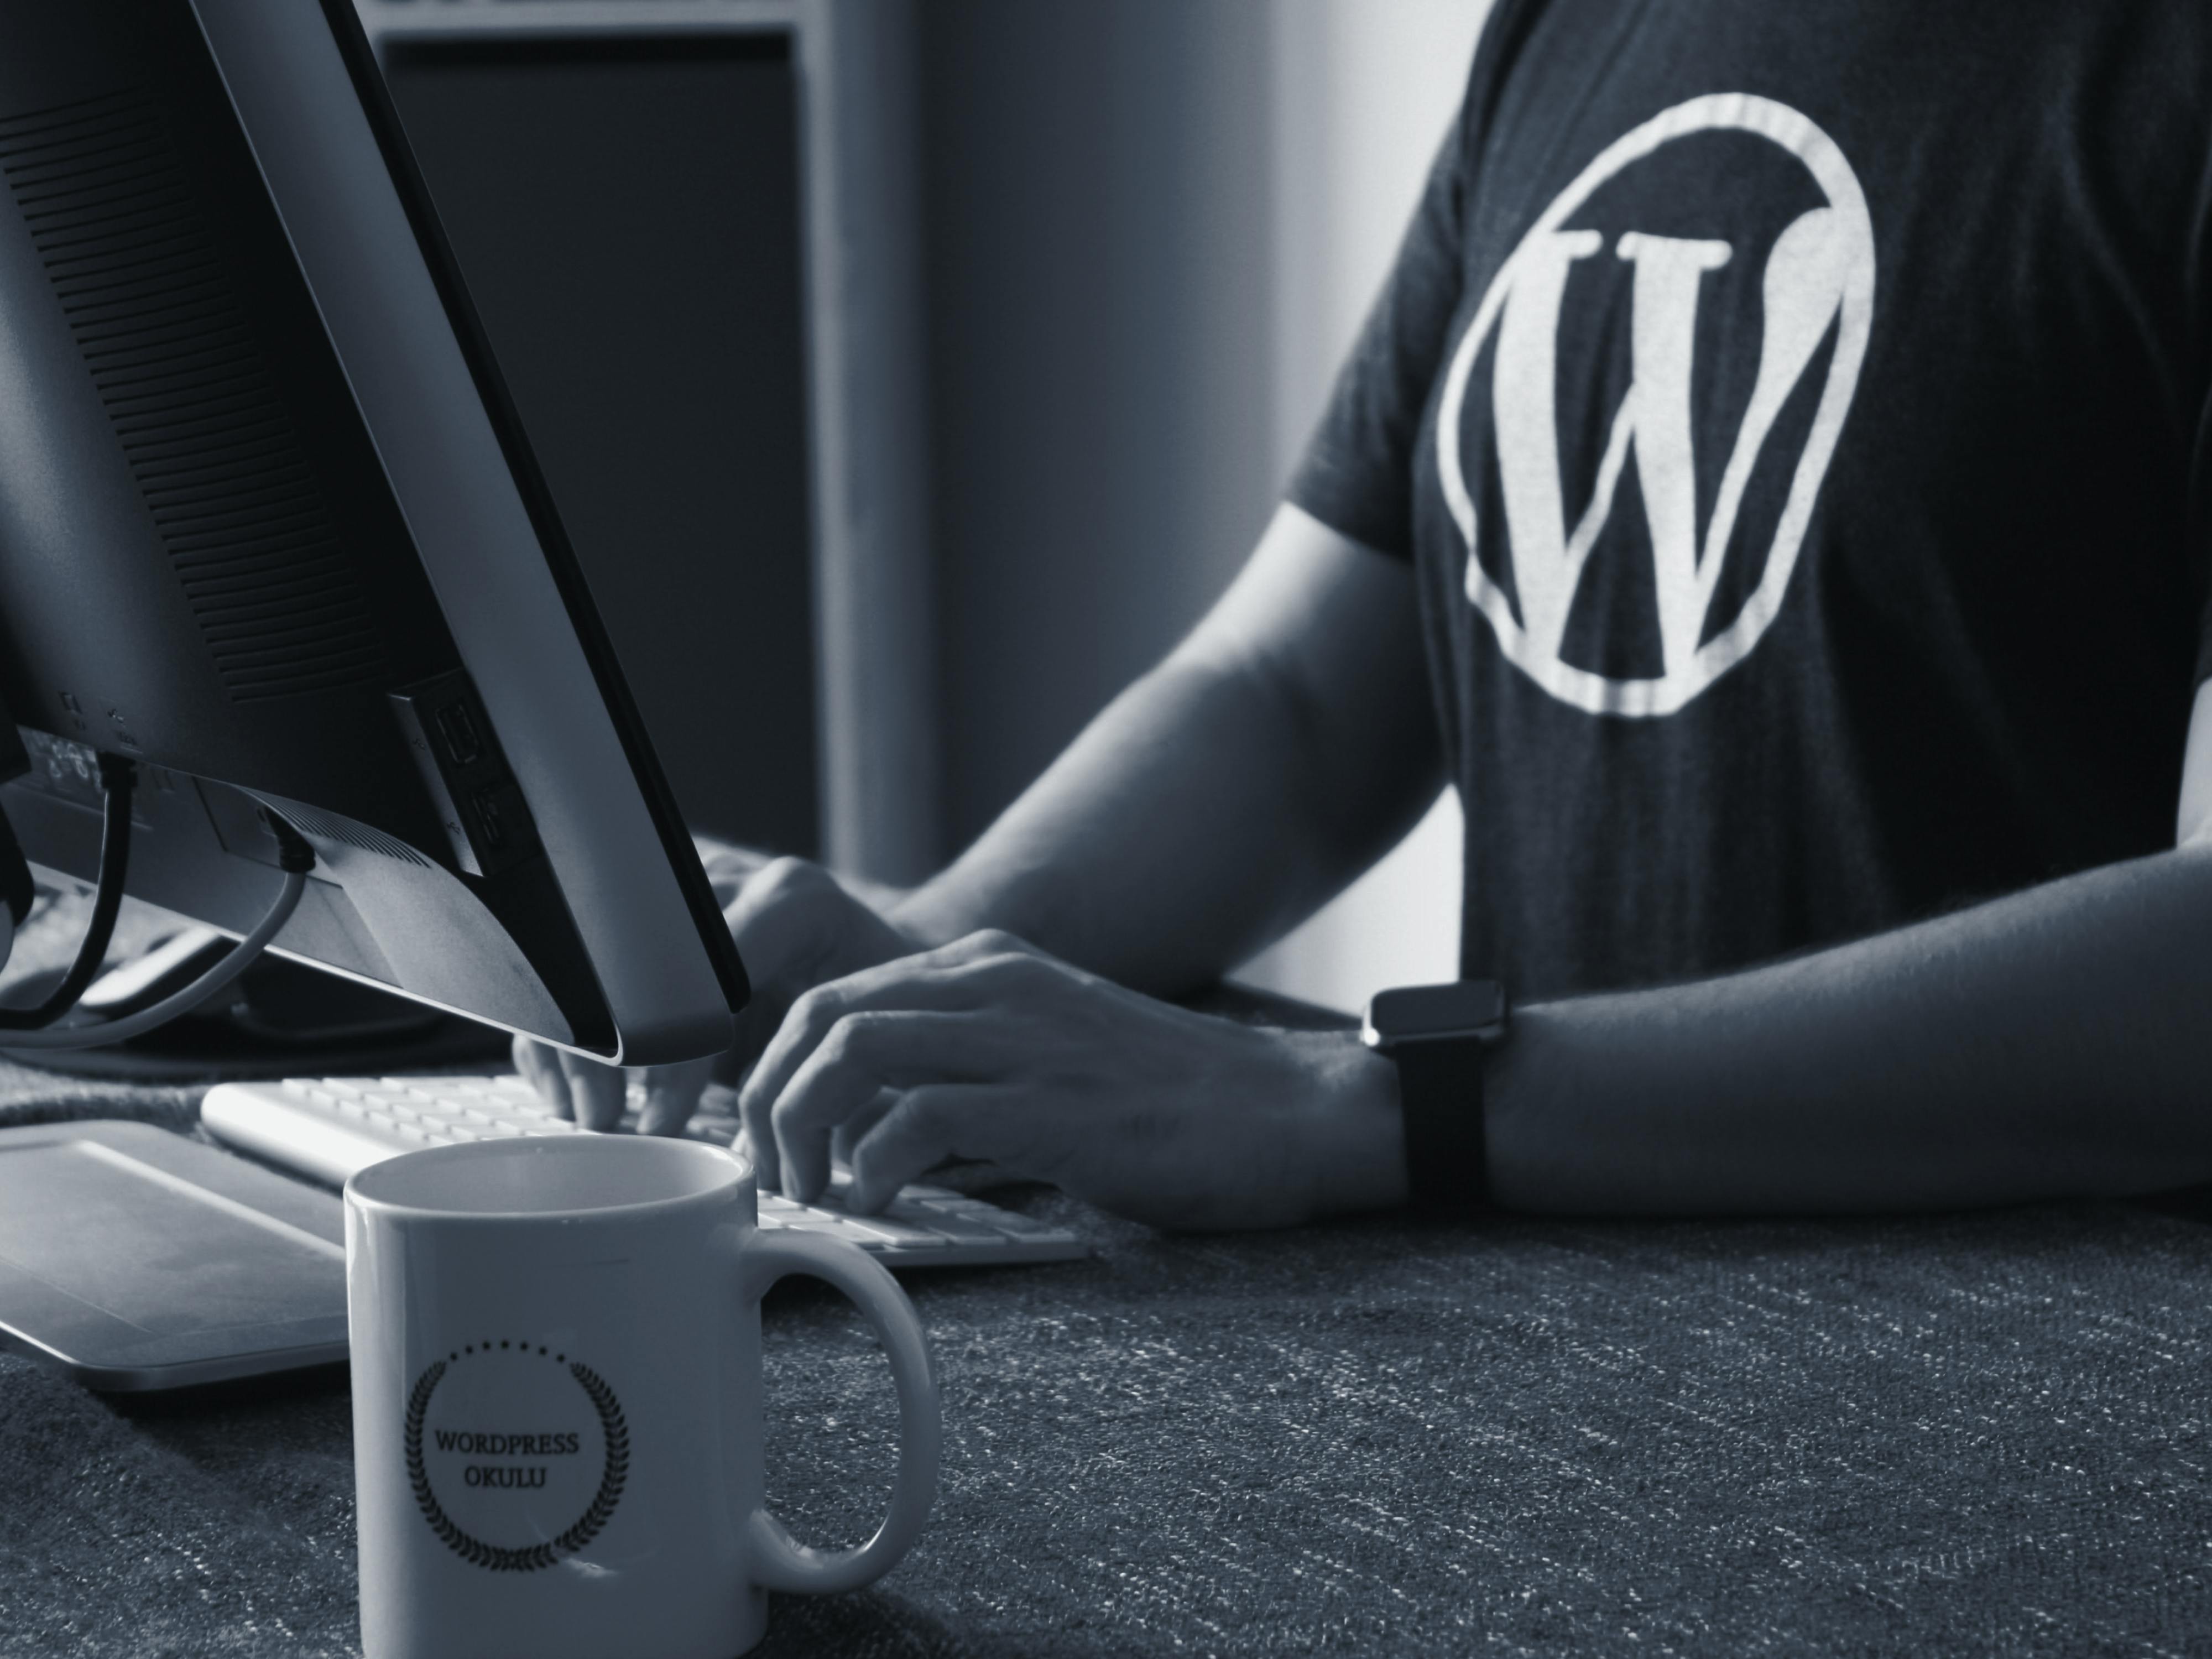 Man wearing a Wordpress T-Shirt working on a computer